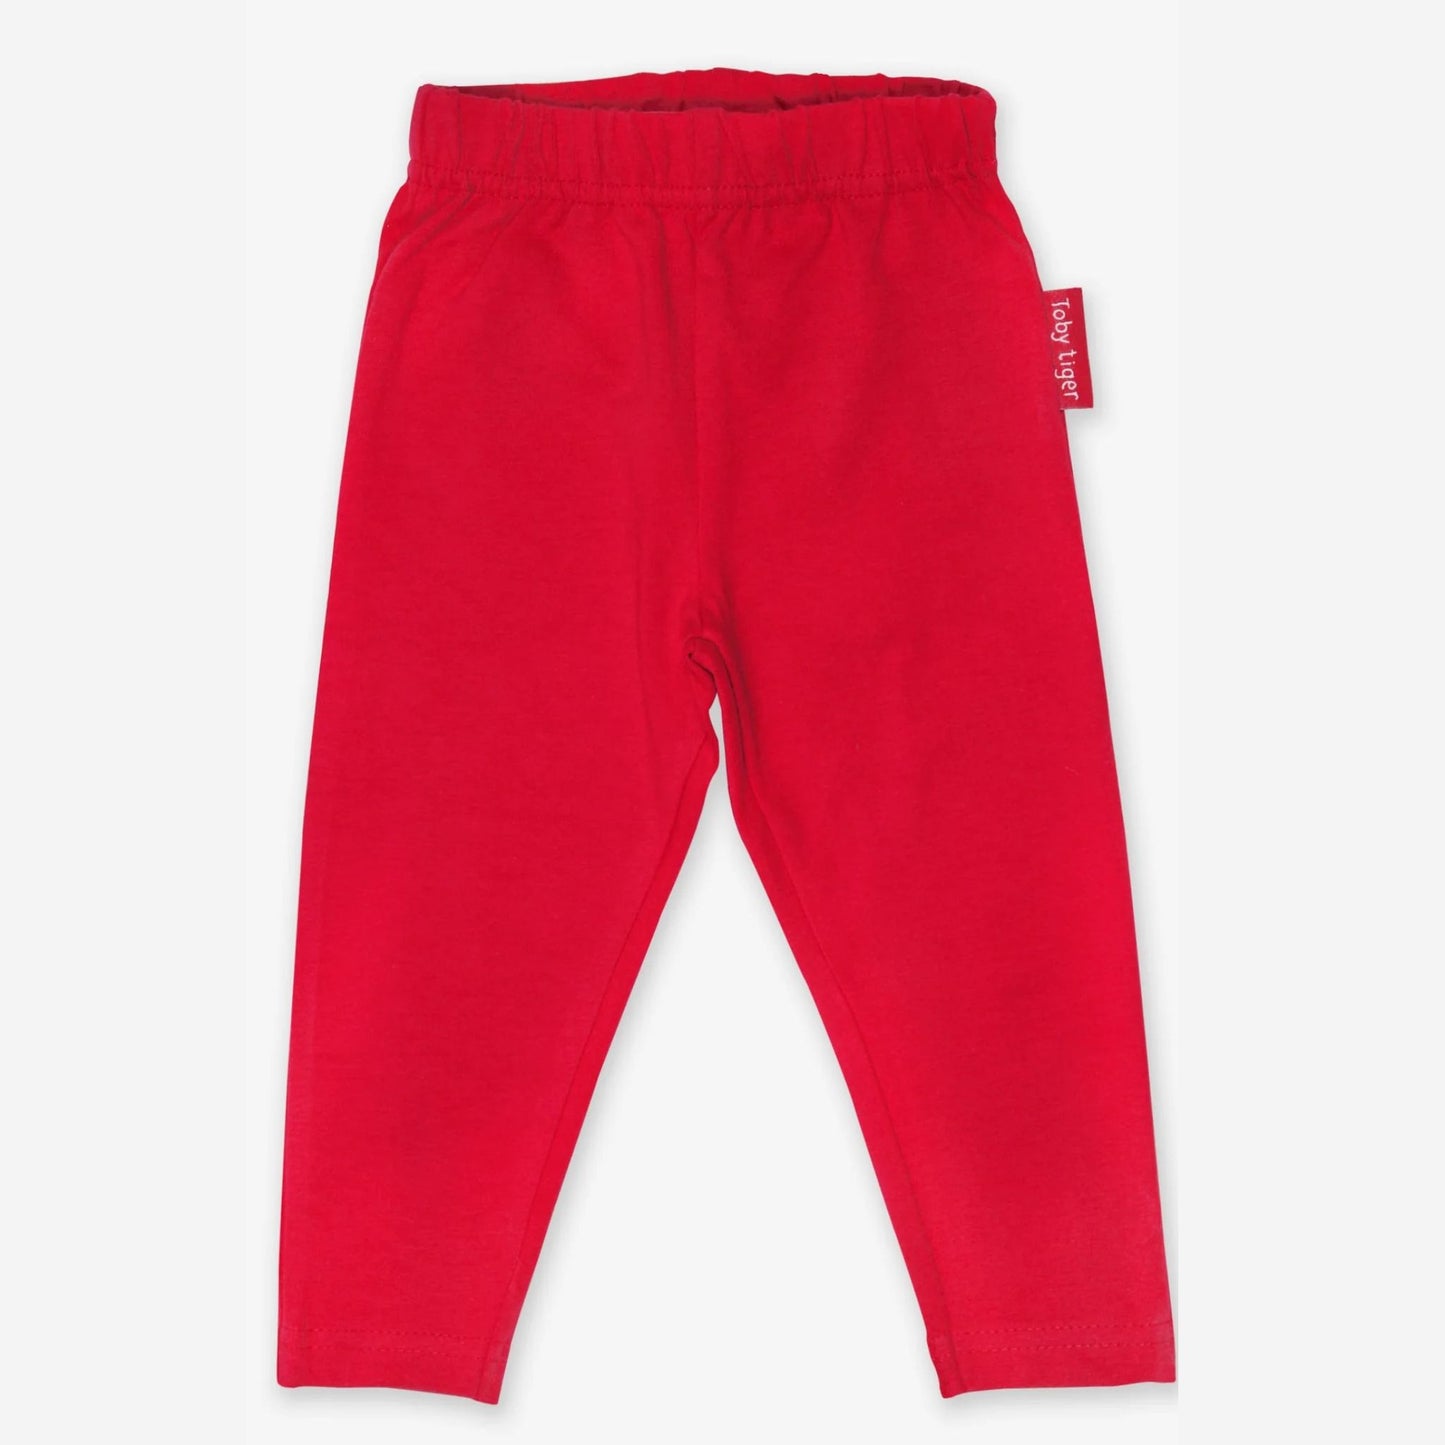 Toby Tiger leggings - red